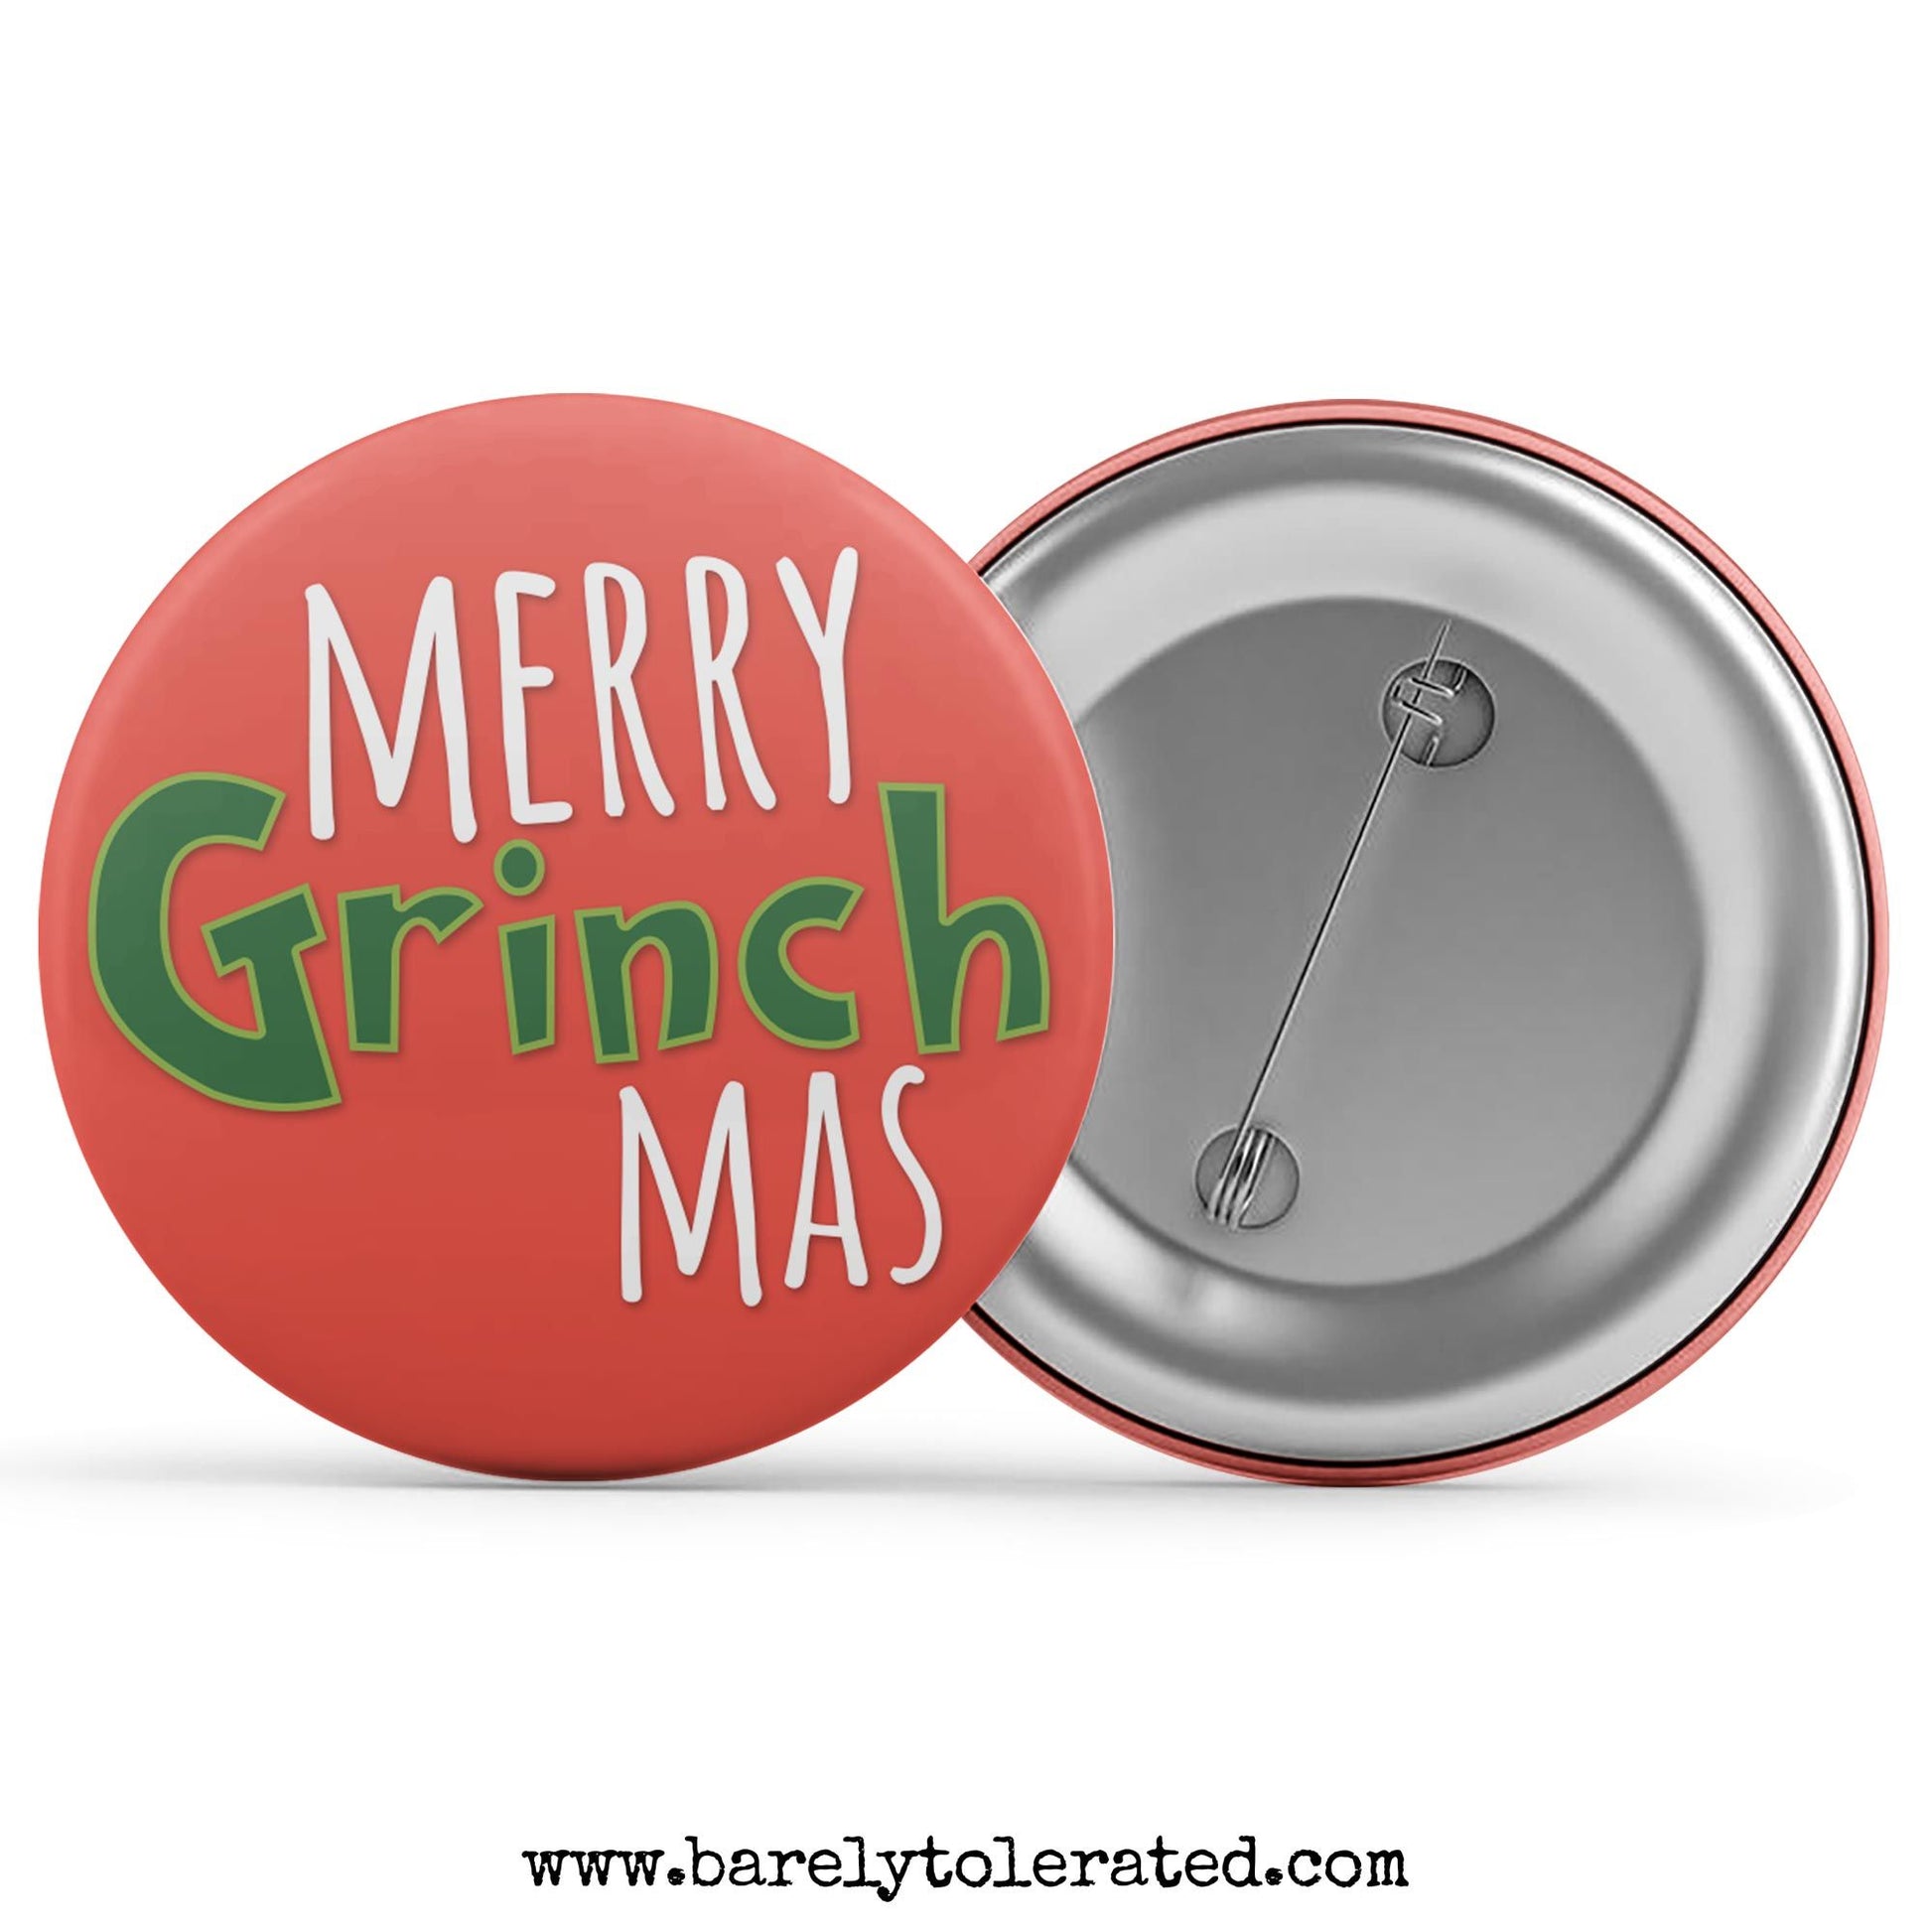 Merry Grinchmas Image